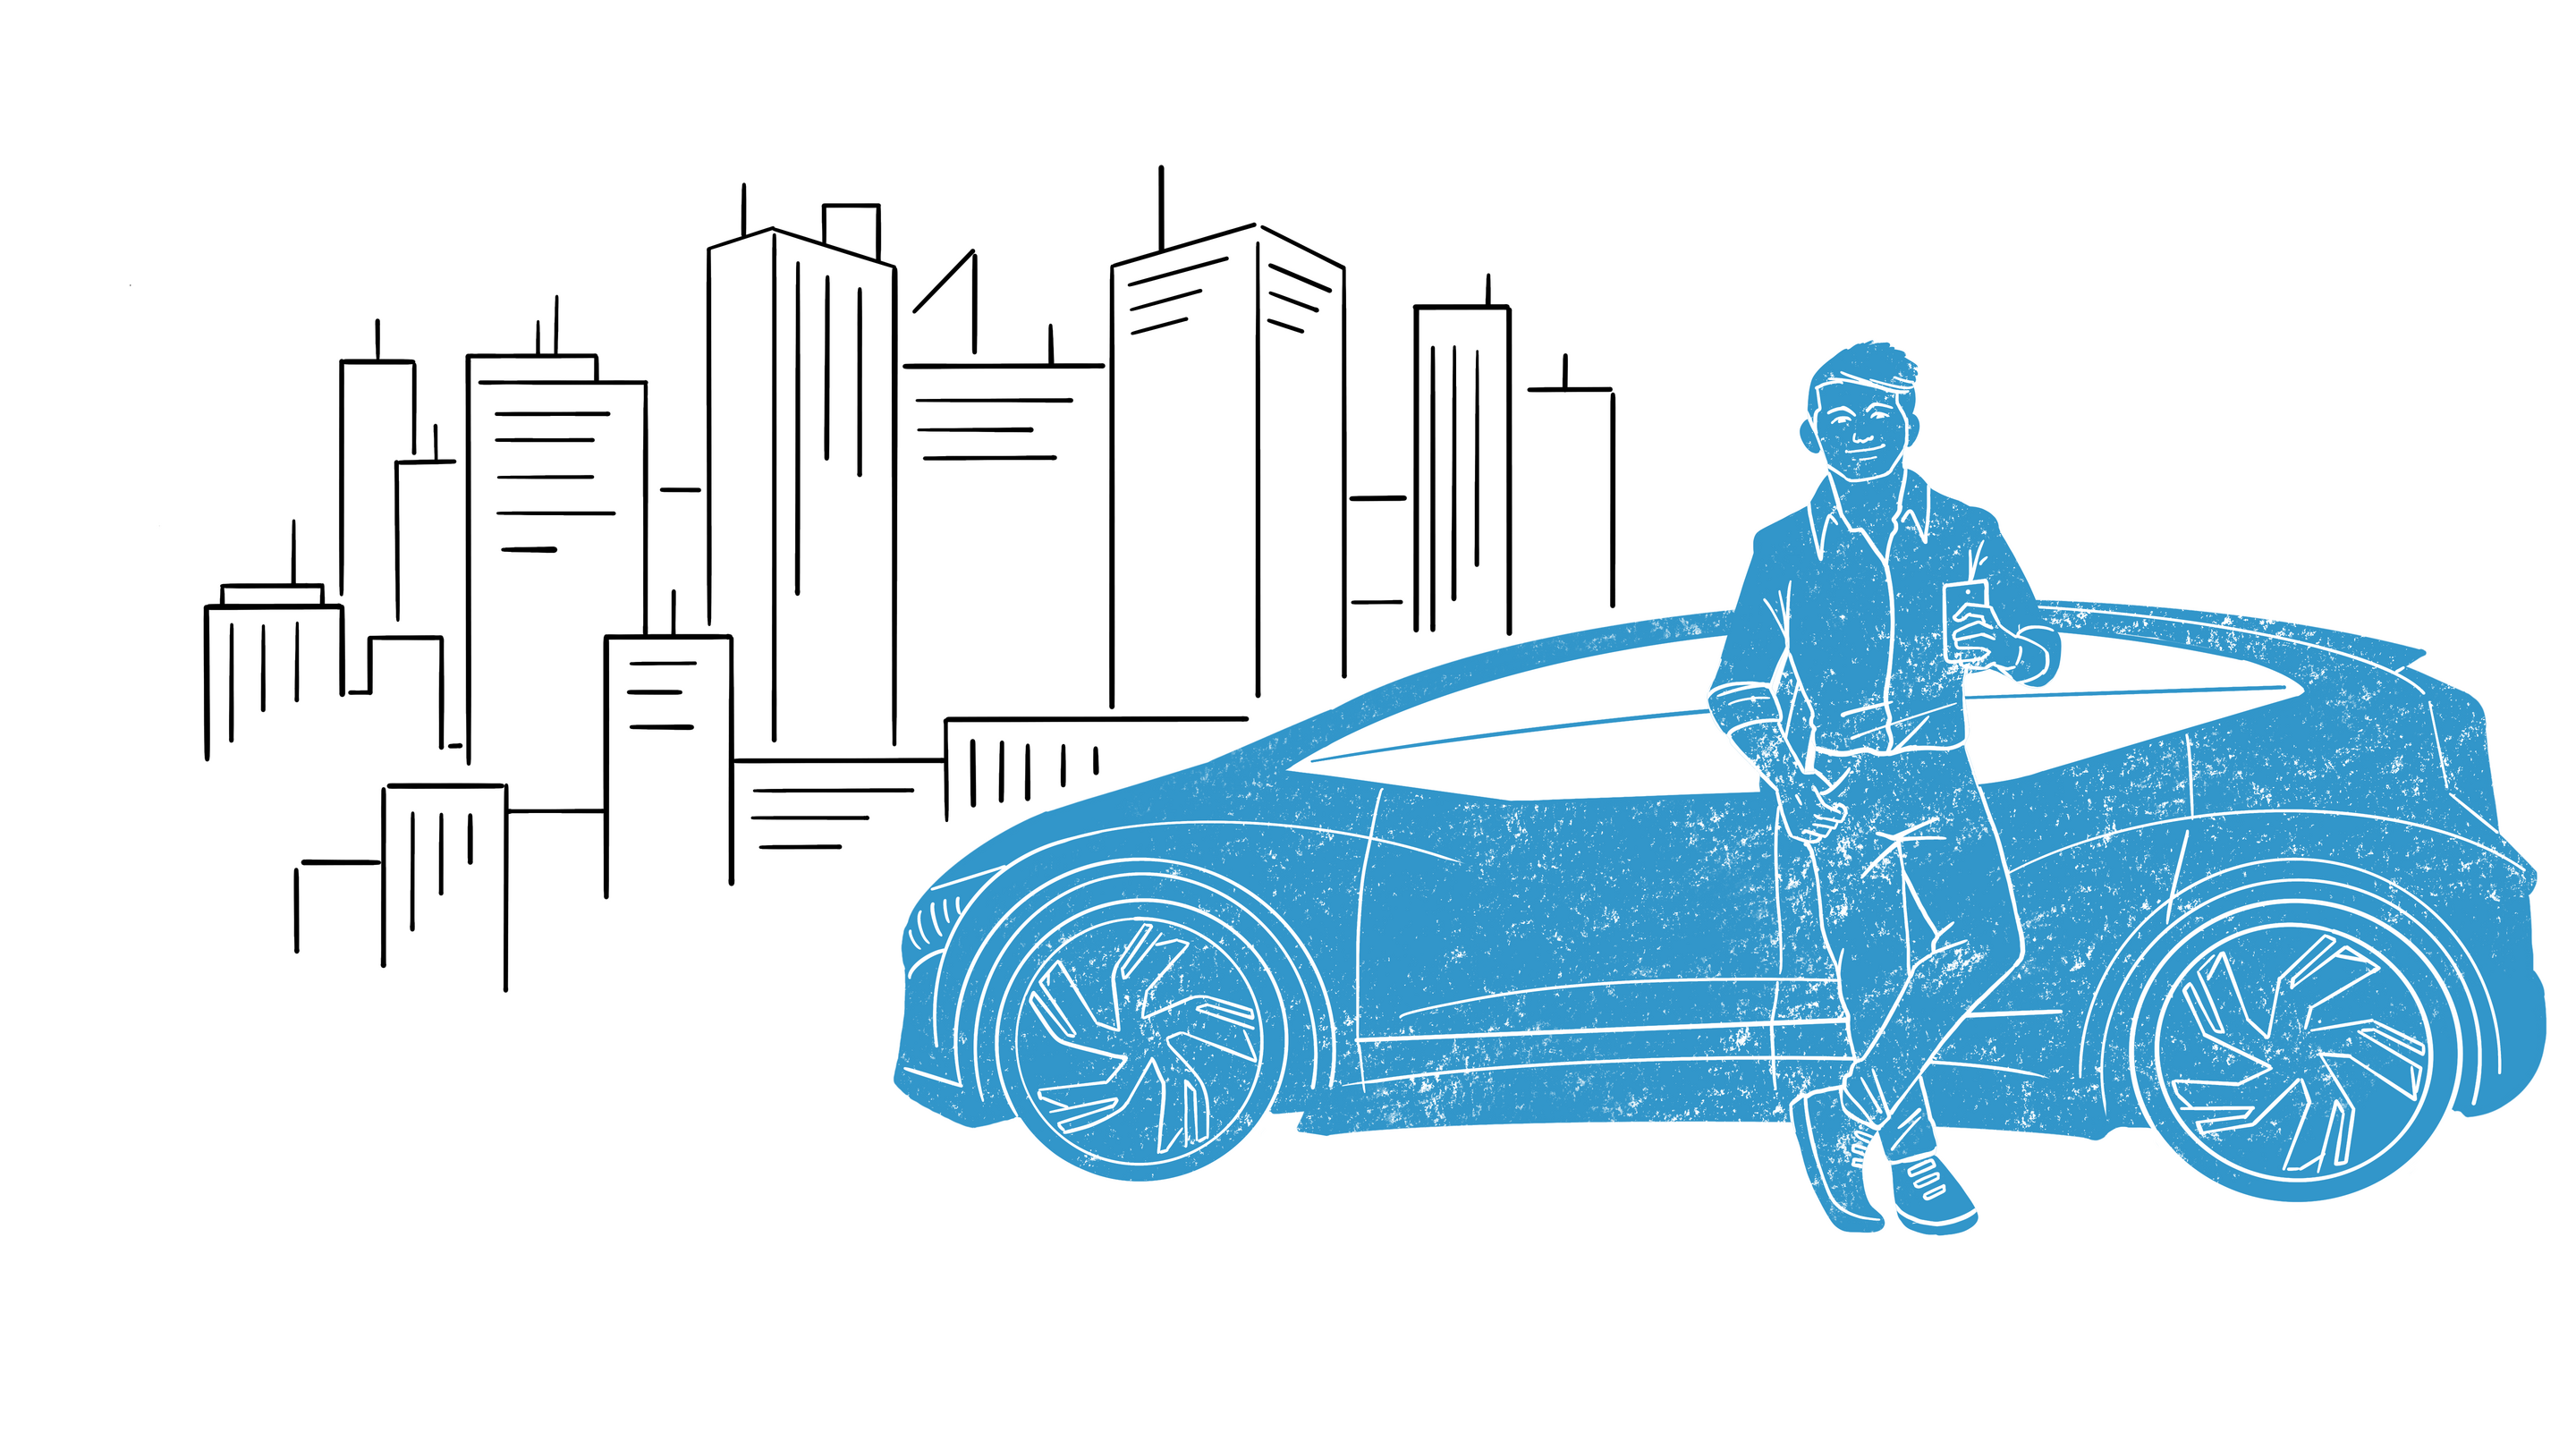 Audi publishes user typology and emotional landscape of autonomous driving